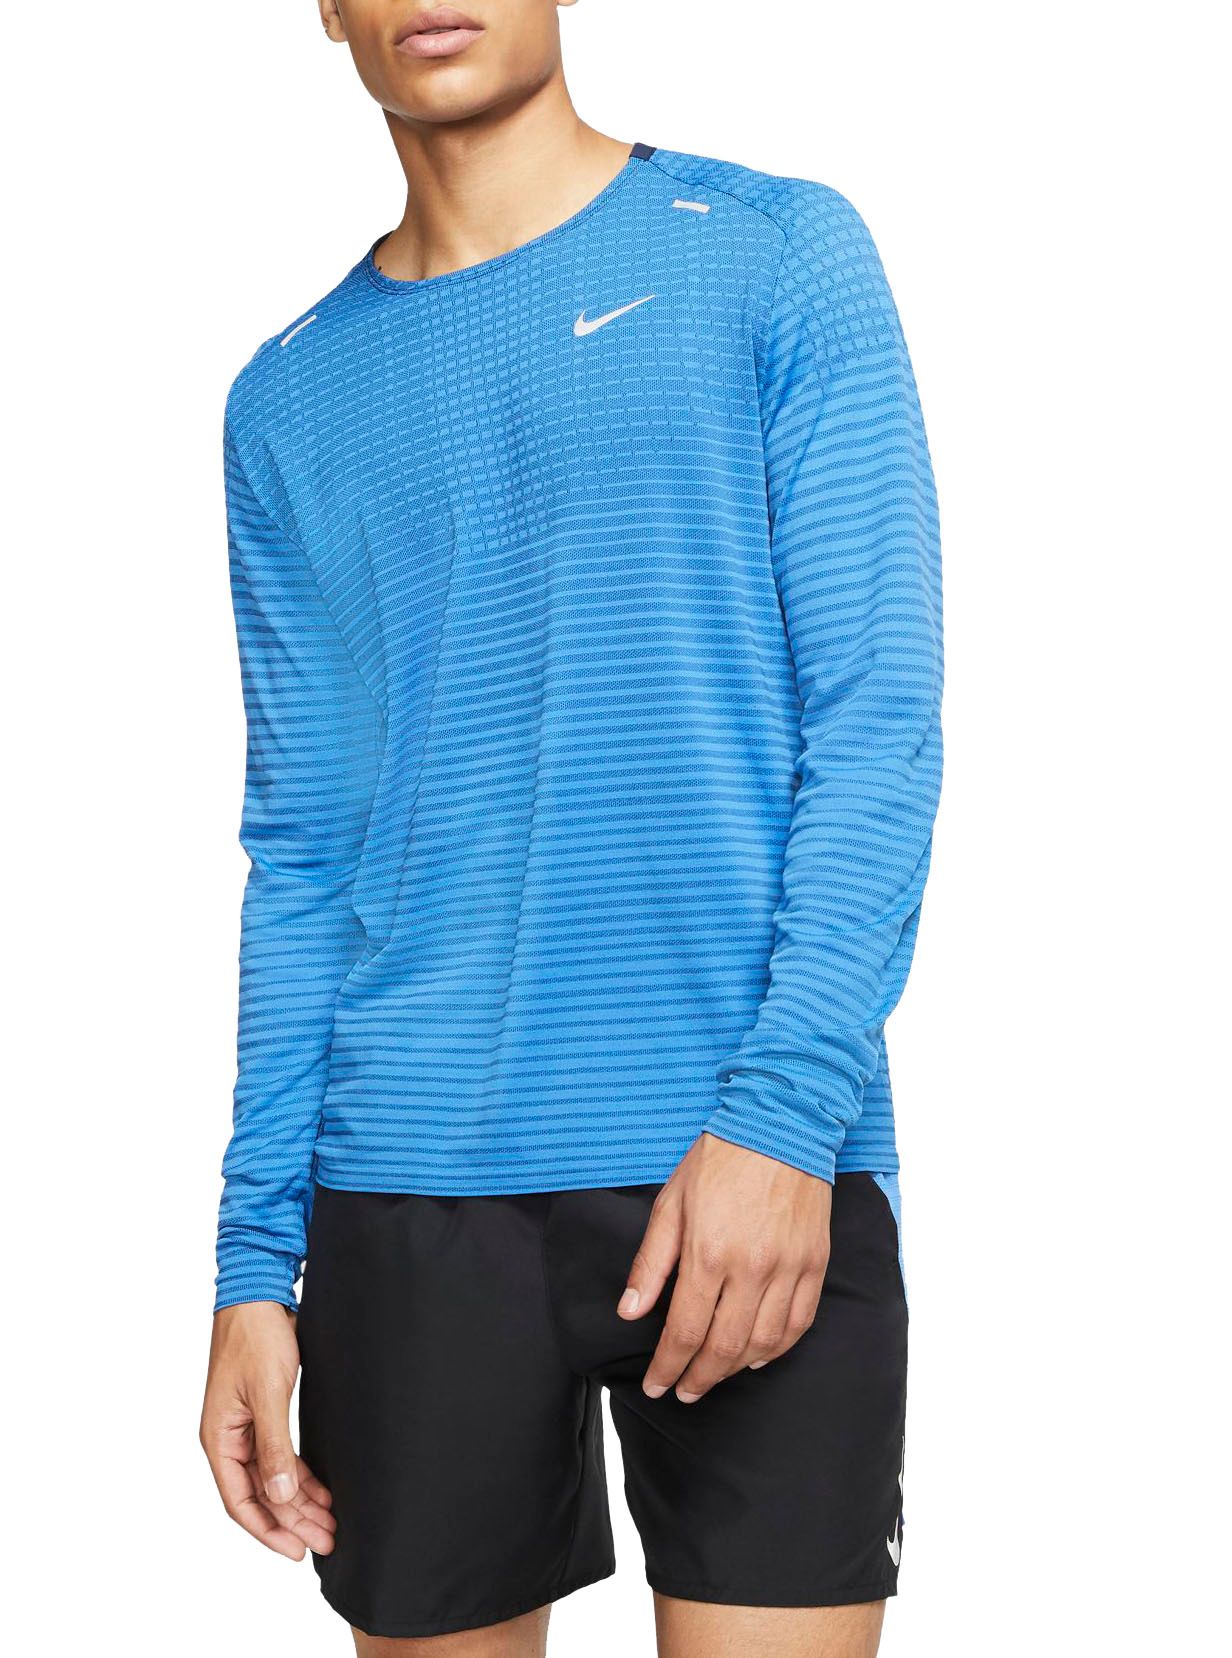 Nike Men's TechKnit Ultra Running Long Sleeve Shirt - .97